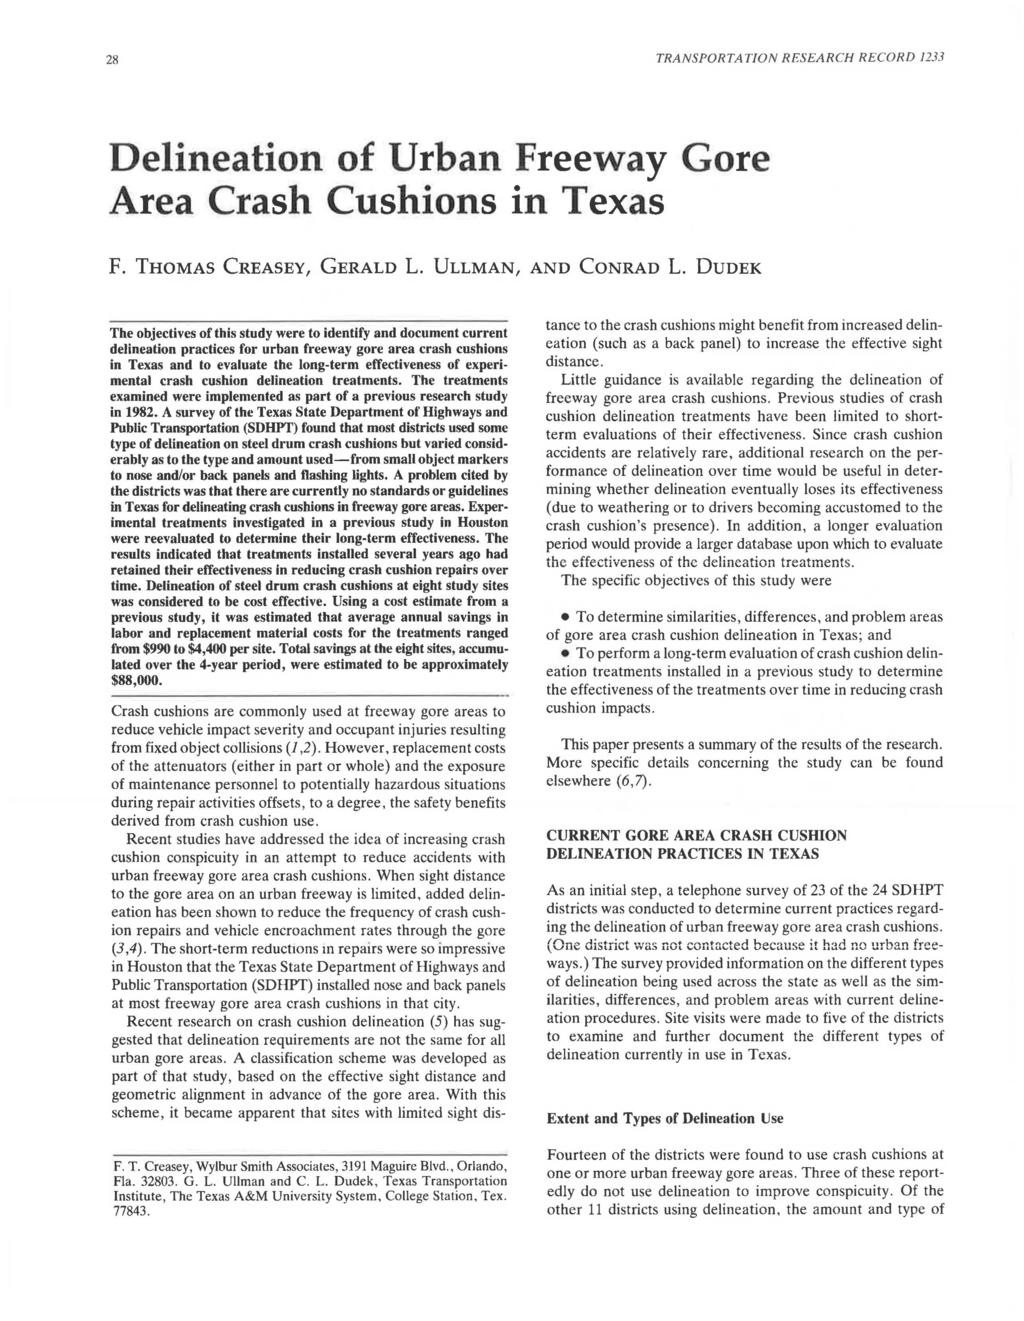 28 TRANSPORTATION RESEARCH RECORD 1233 Delineation of Urban Freeway Gore Area Crash Cushions in Texas F. THOMAS CREASEY, GERALD L. ULLMAN, AND CONRAD L.